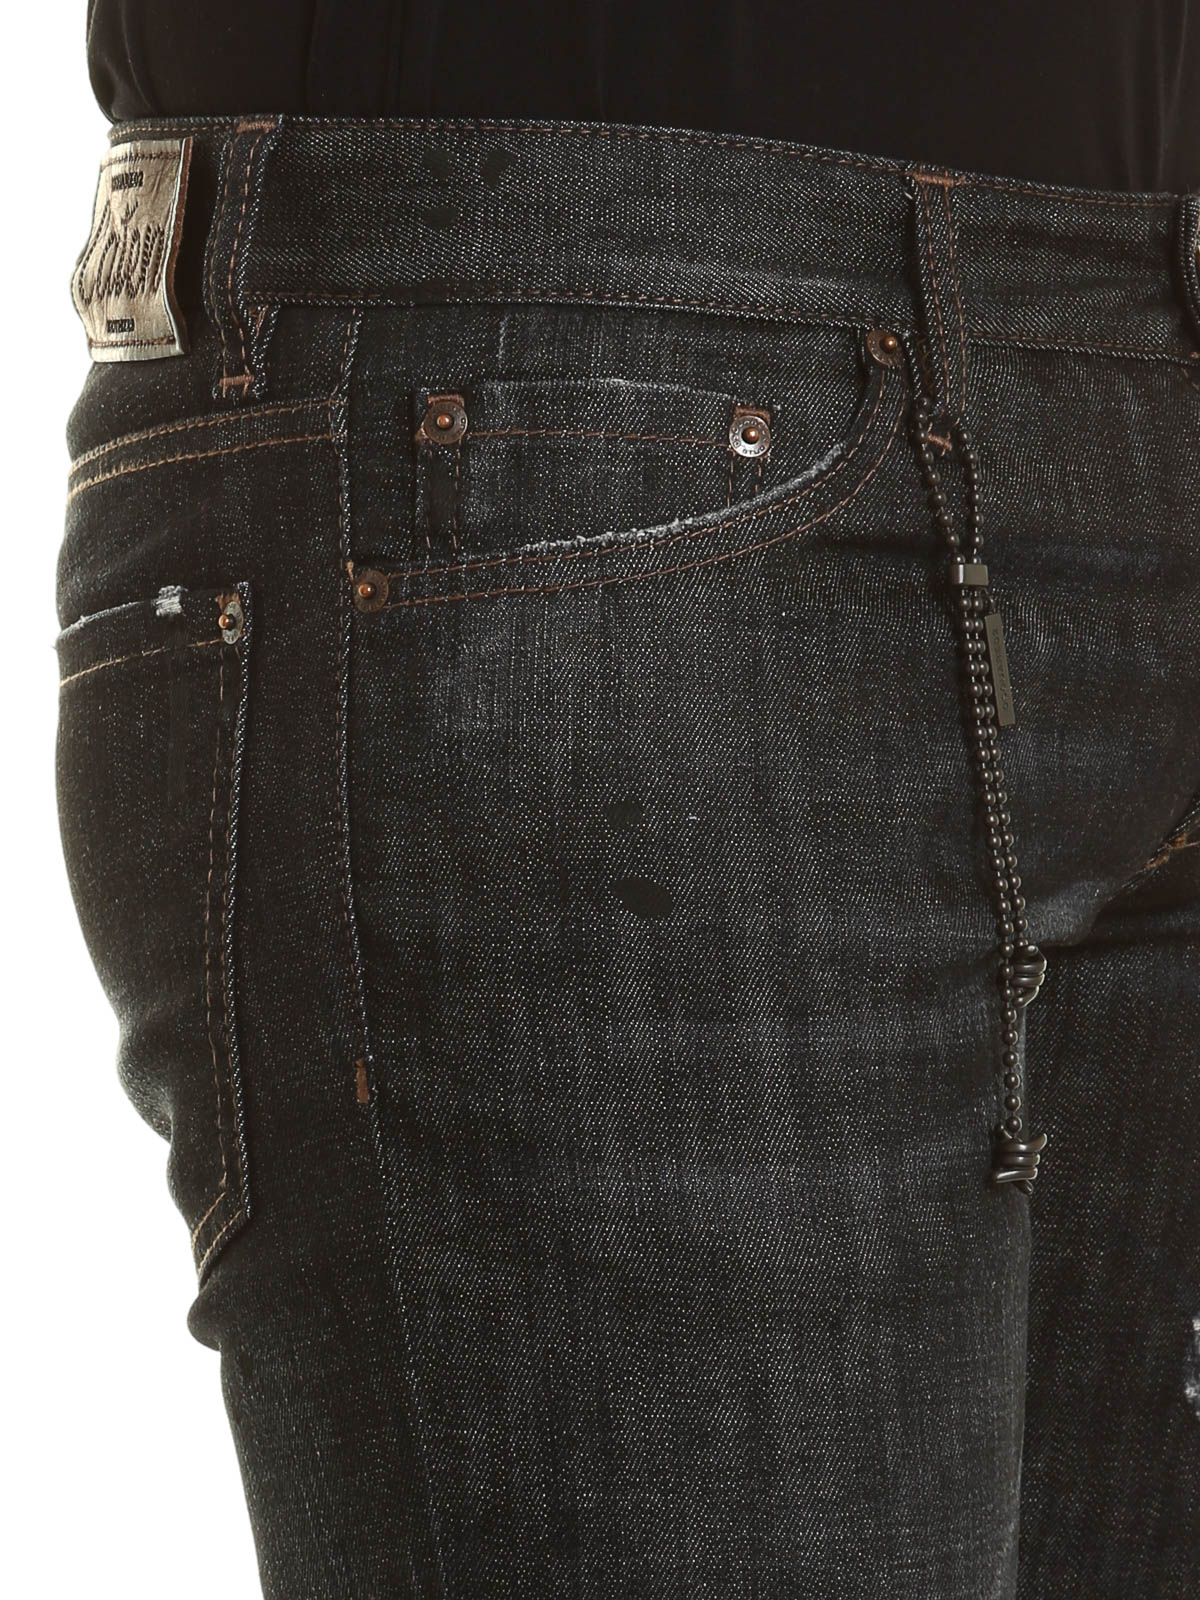 Skinny jeans Dsquared2 - Cool Guy scraped denim jeans - S74LB0107S30357900